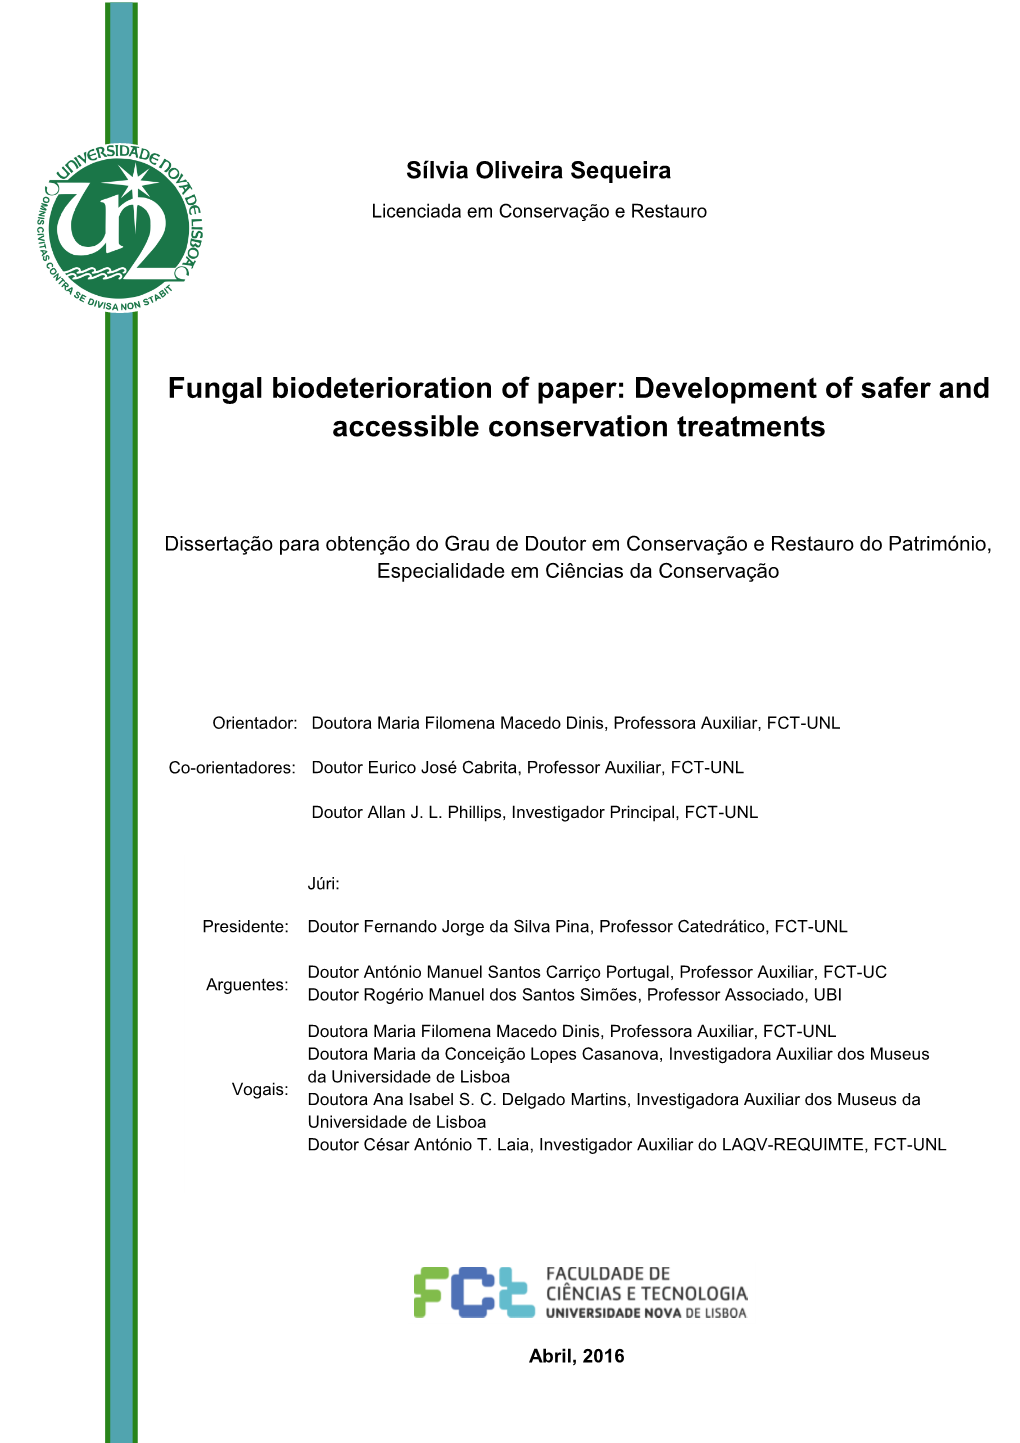 Fungal Biodeterioration of Paper: Development of Safer and [Nome Completo Do Autor]Accessible Conservation Treatments [Habilitações Académicas]